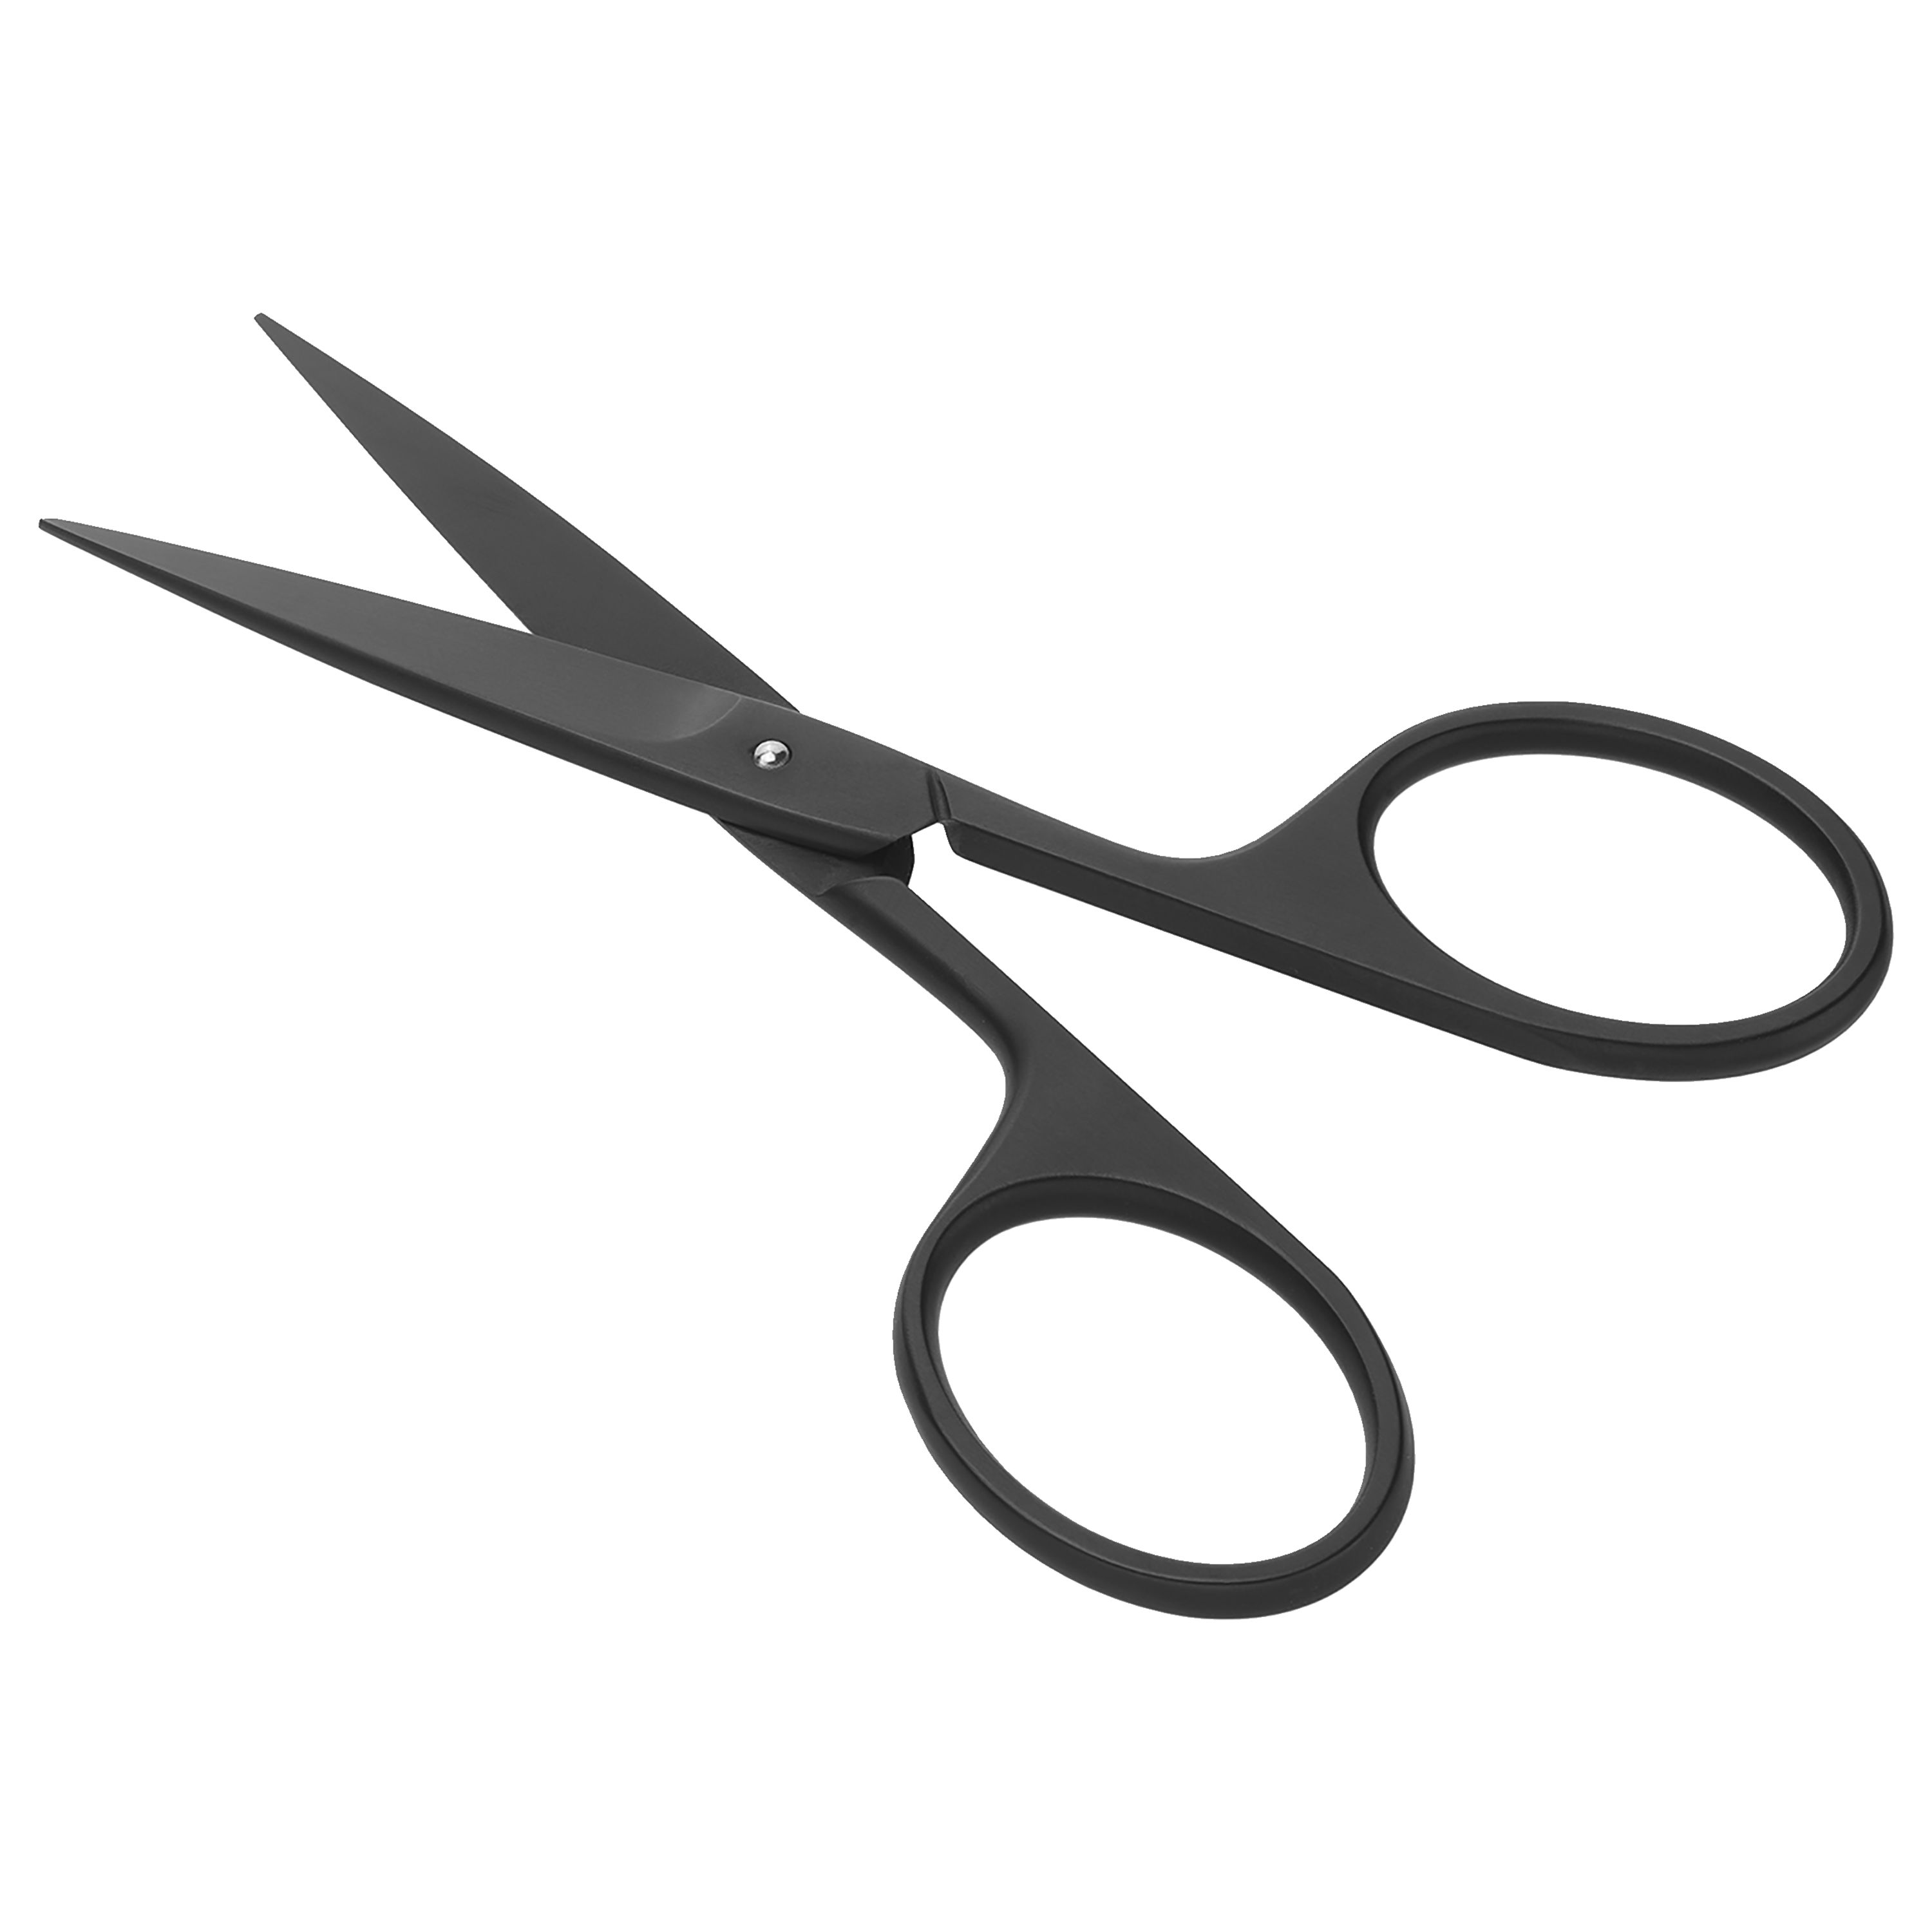 Beard scissors BT TWINOX M, Zwilling 